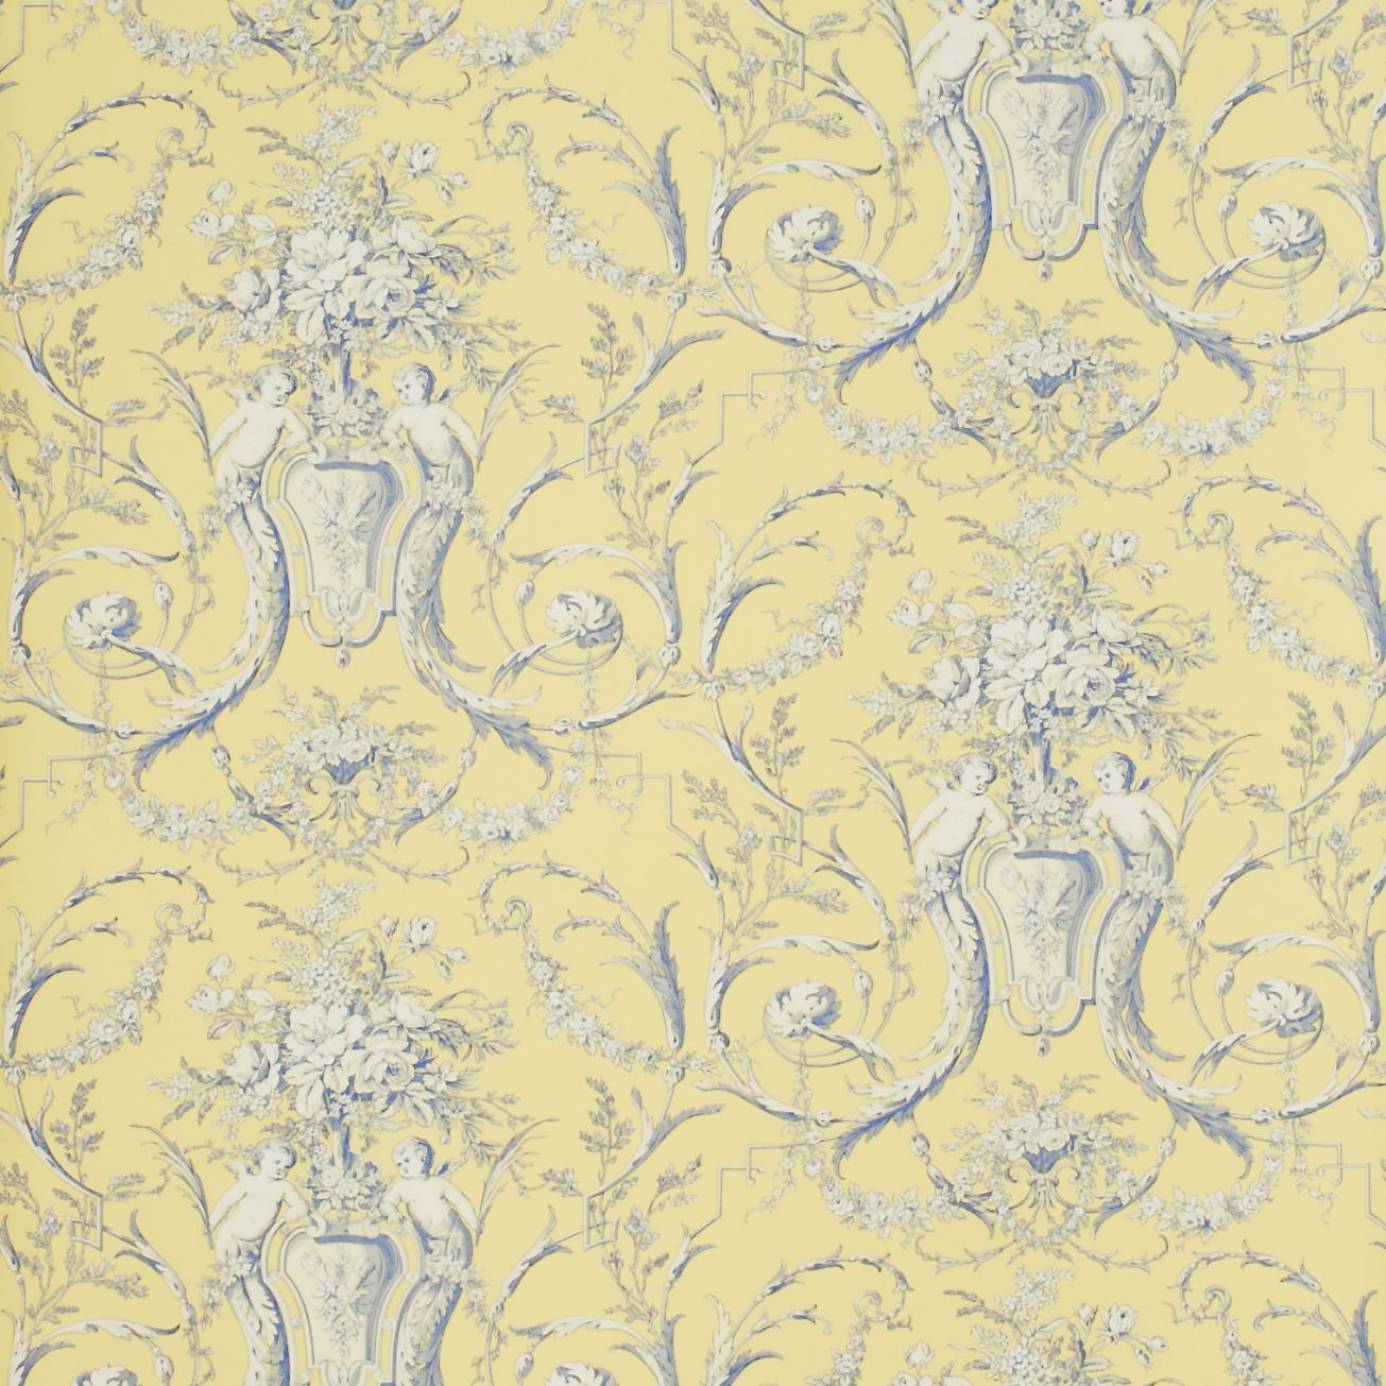 Cherubs Toile Wallpaper - Mimosa/Marine (DEGTCH103) - Sanderson Toile